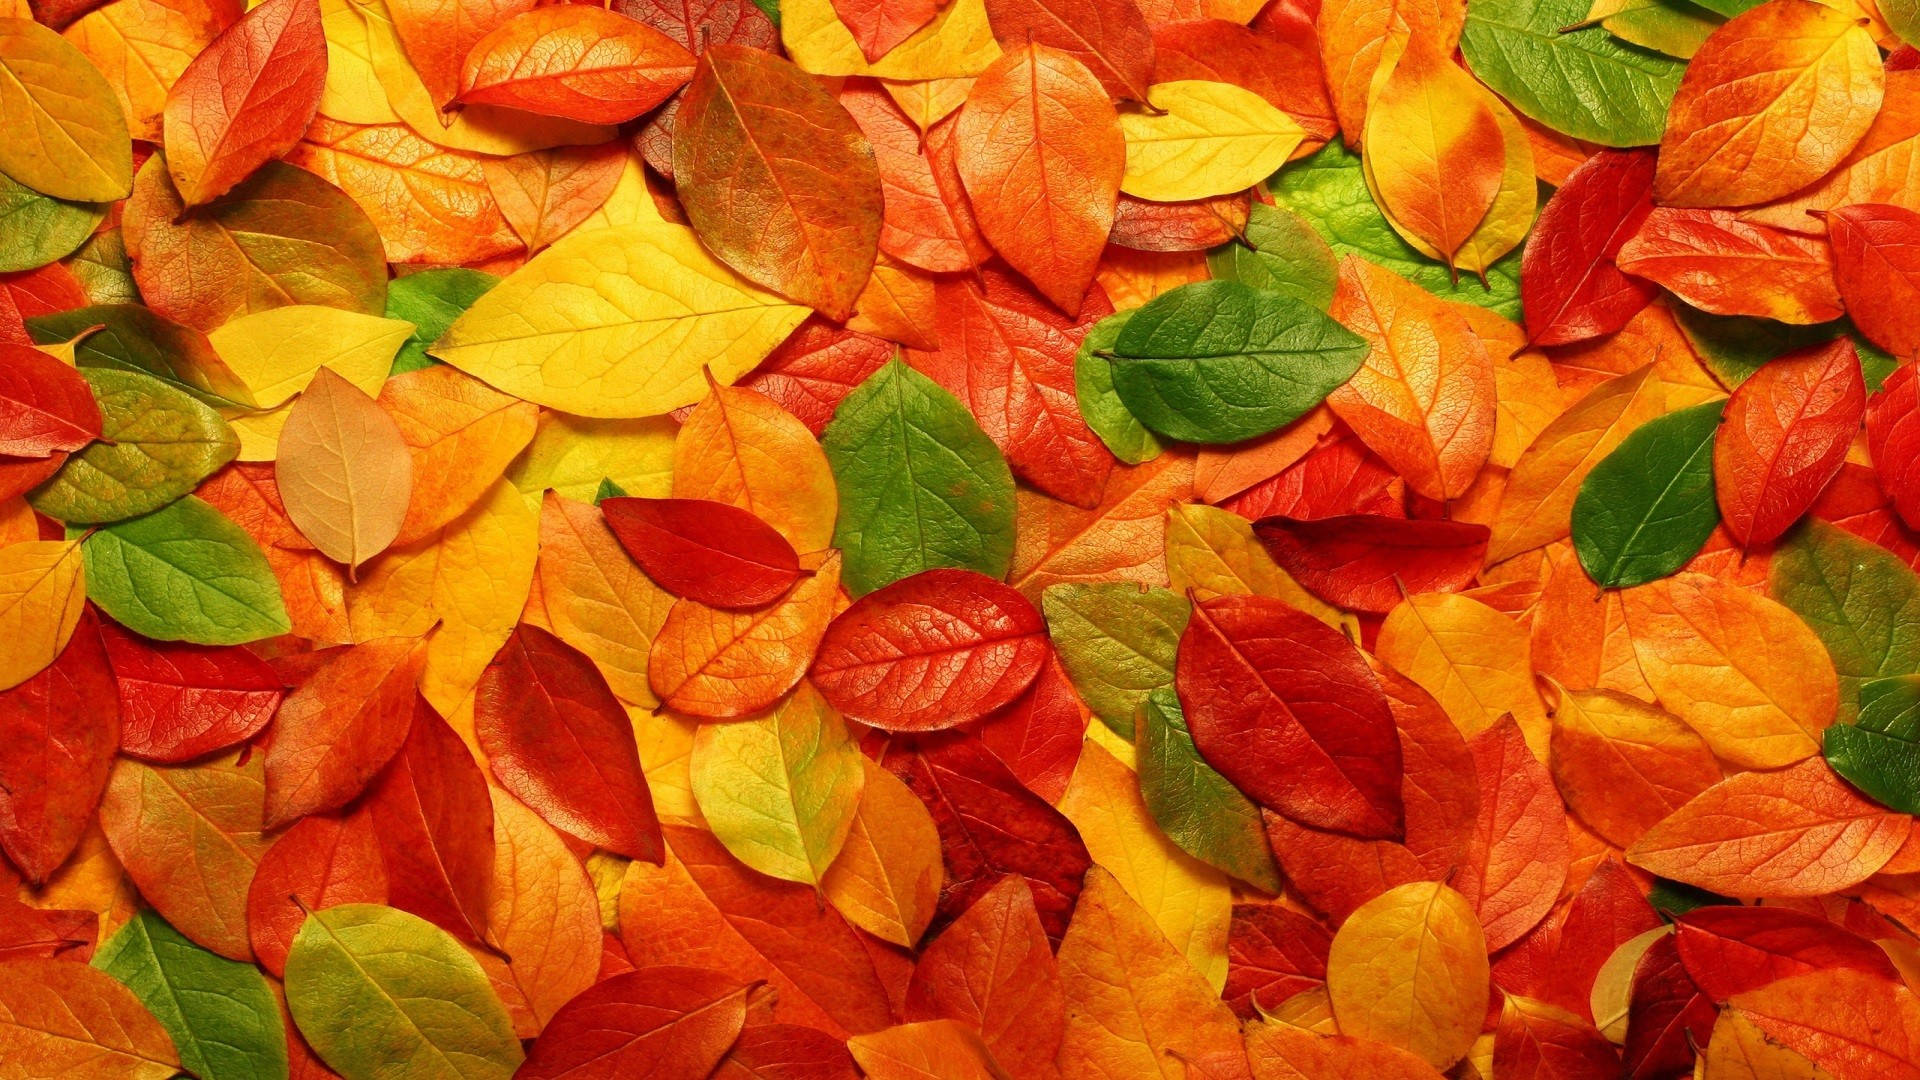 Autumn Season Wallpaper Images